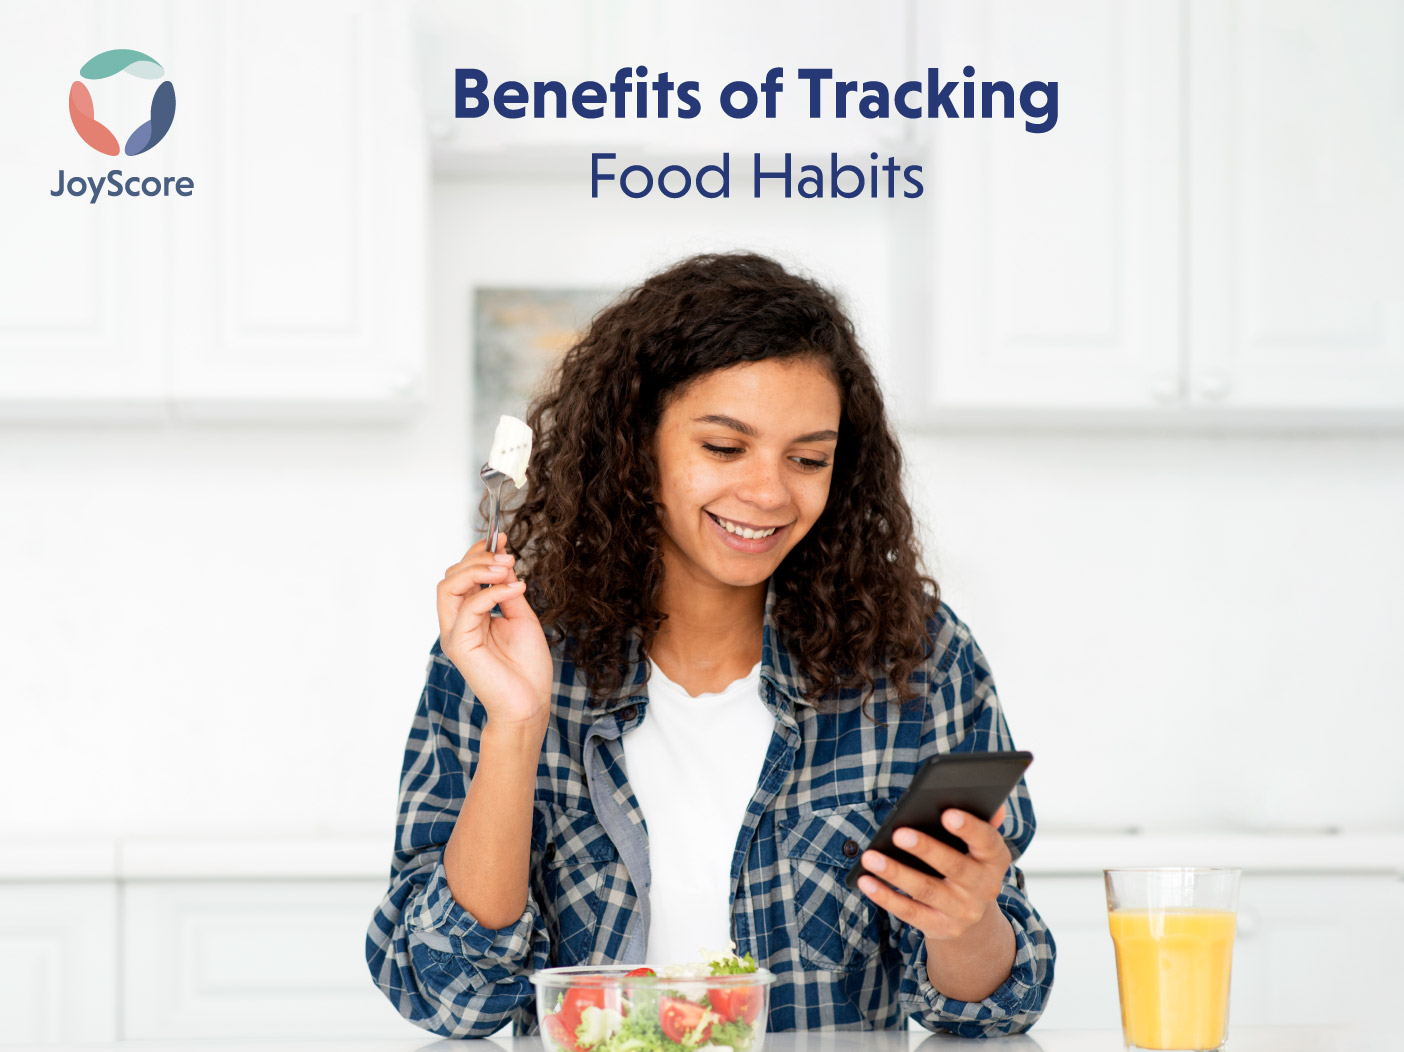 Benefits of tracking food habits